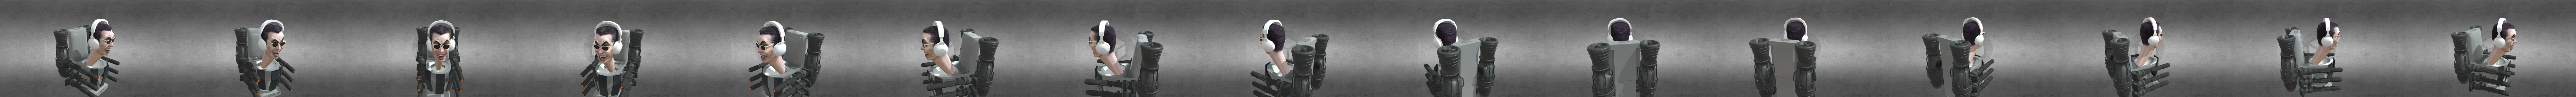 skibidi-toilet-Gman-upgraded - Download Free 3D model by What the heck!?  Boom! (@Dafukbooooom) [62a2aff]